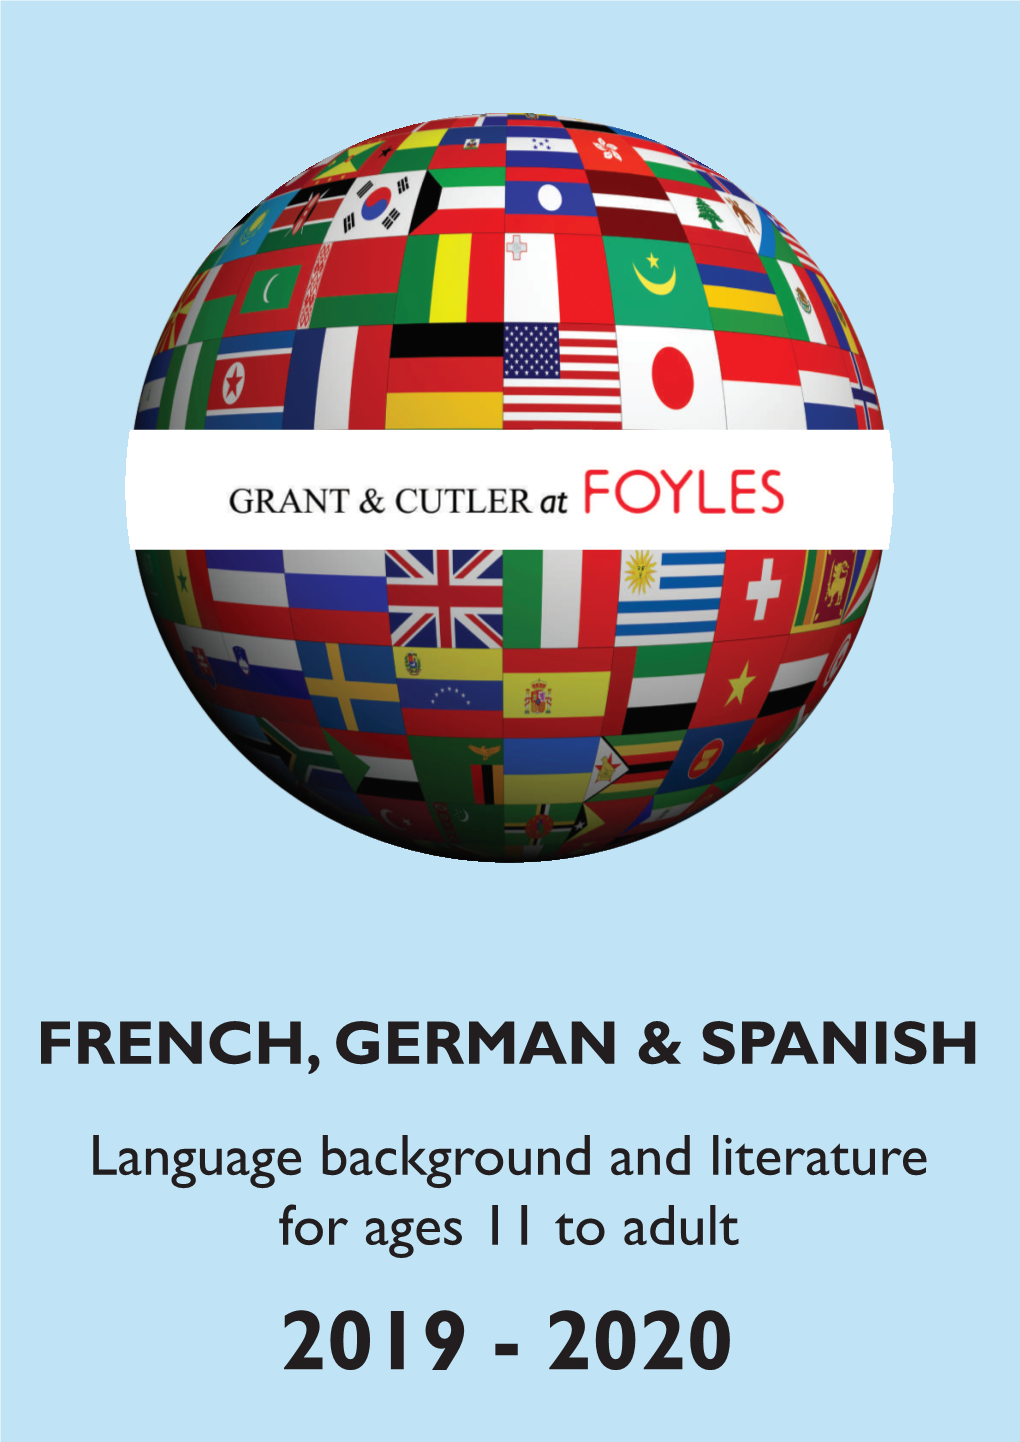 French, German & Spanish Catalogue 2019-2020